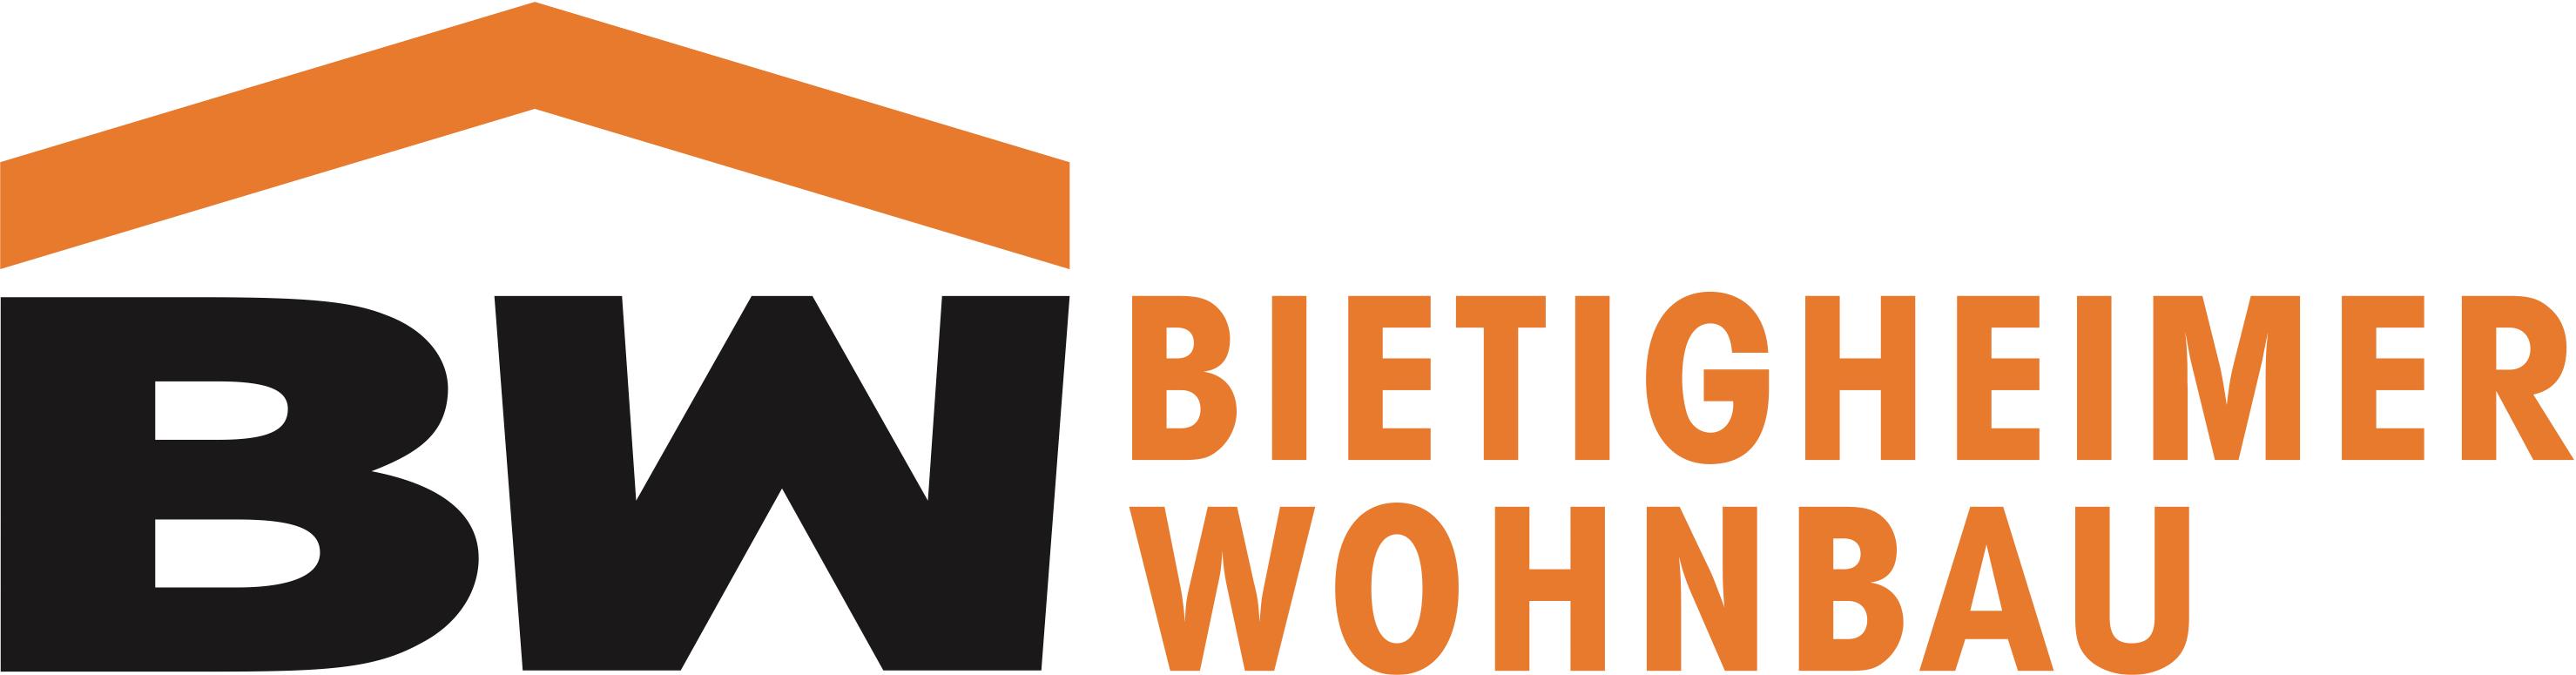 referenz-logo-bietigheimer-wohnbau.jpg